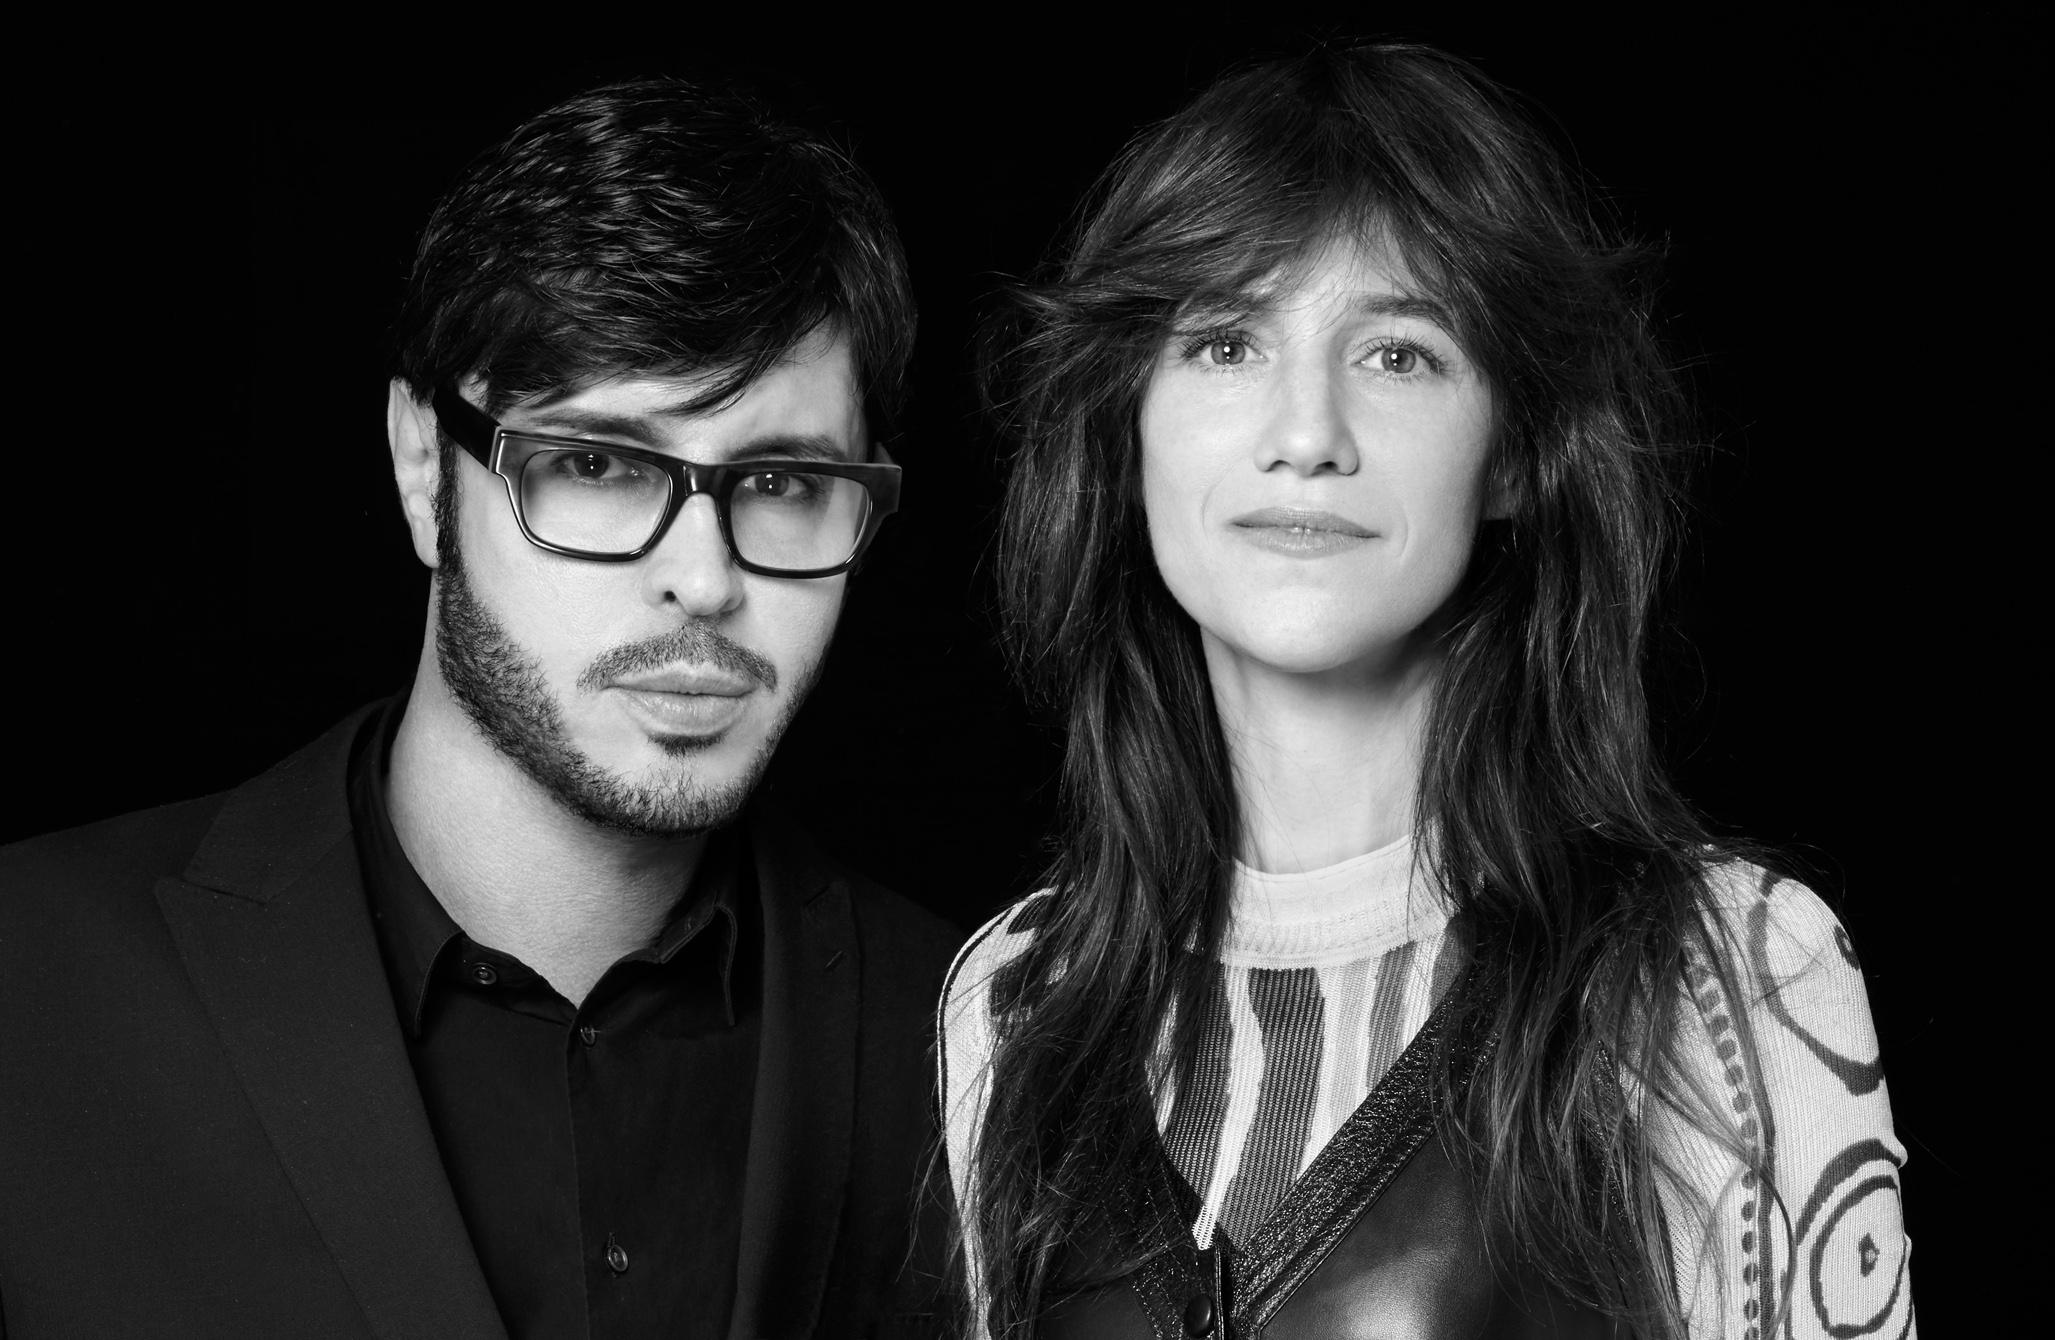 Creative collaborators François Nars and Charlotte Gainsbourg